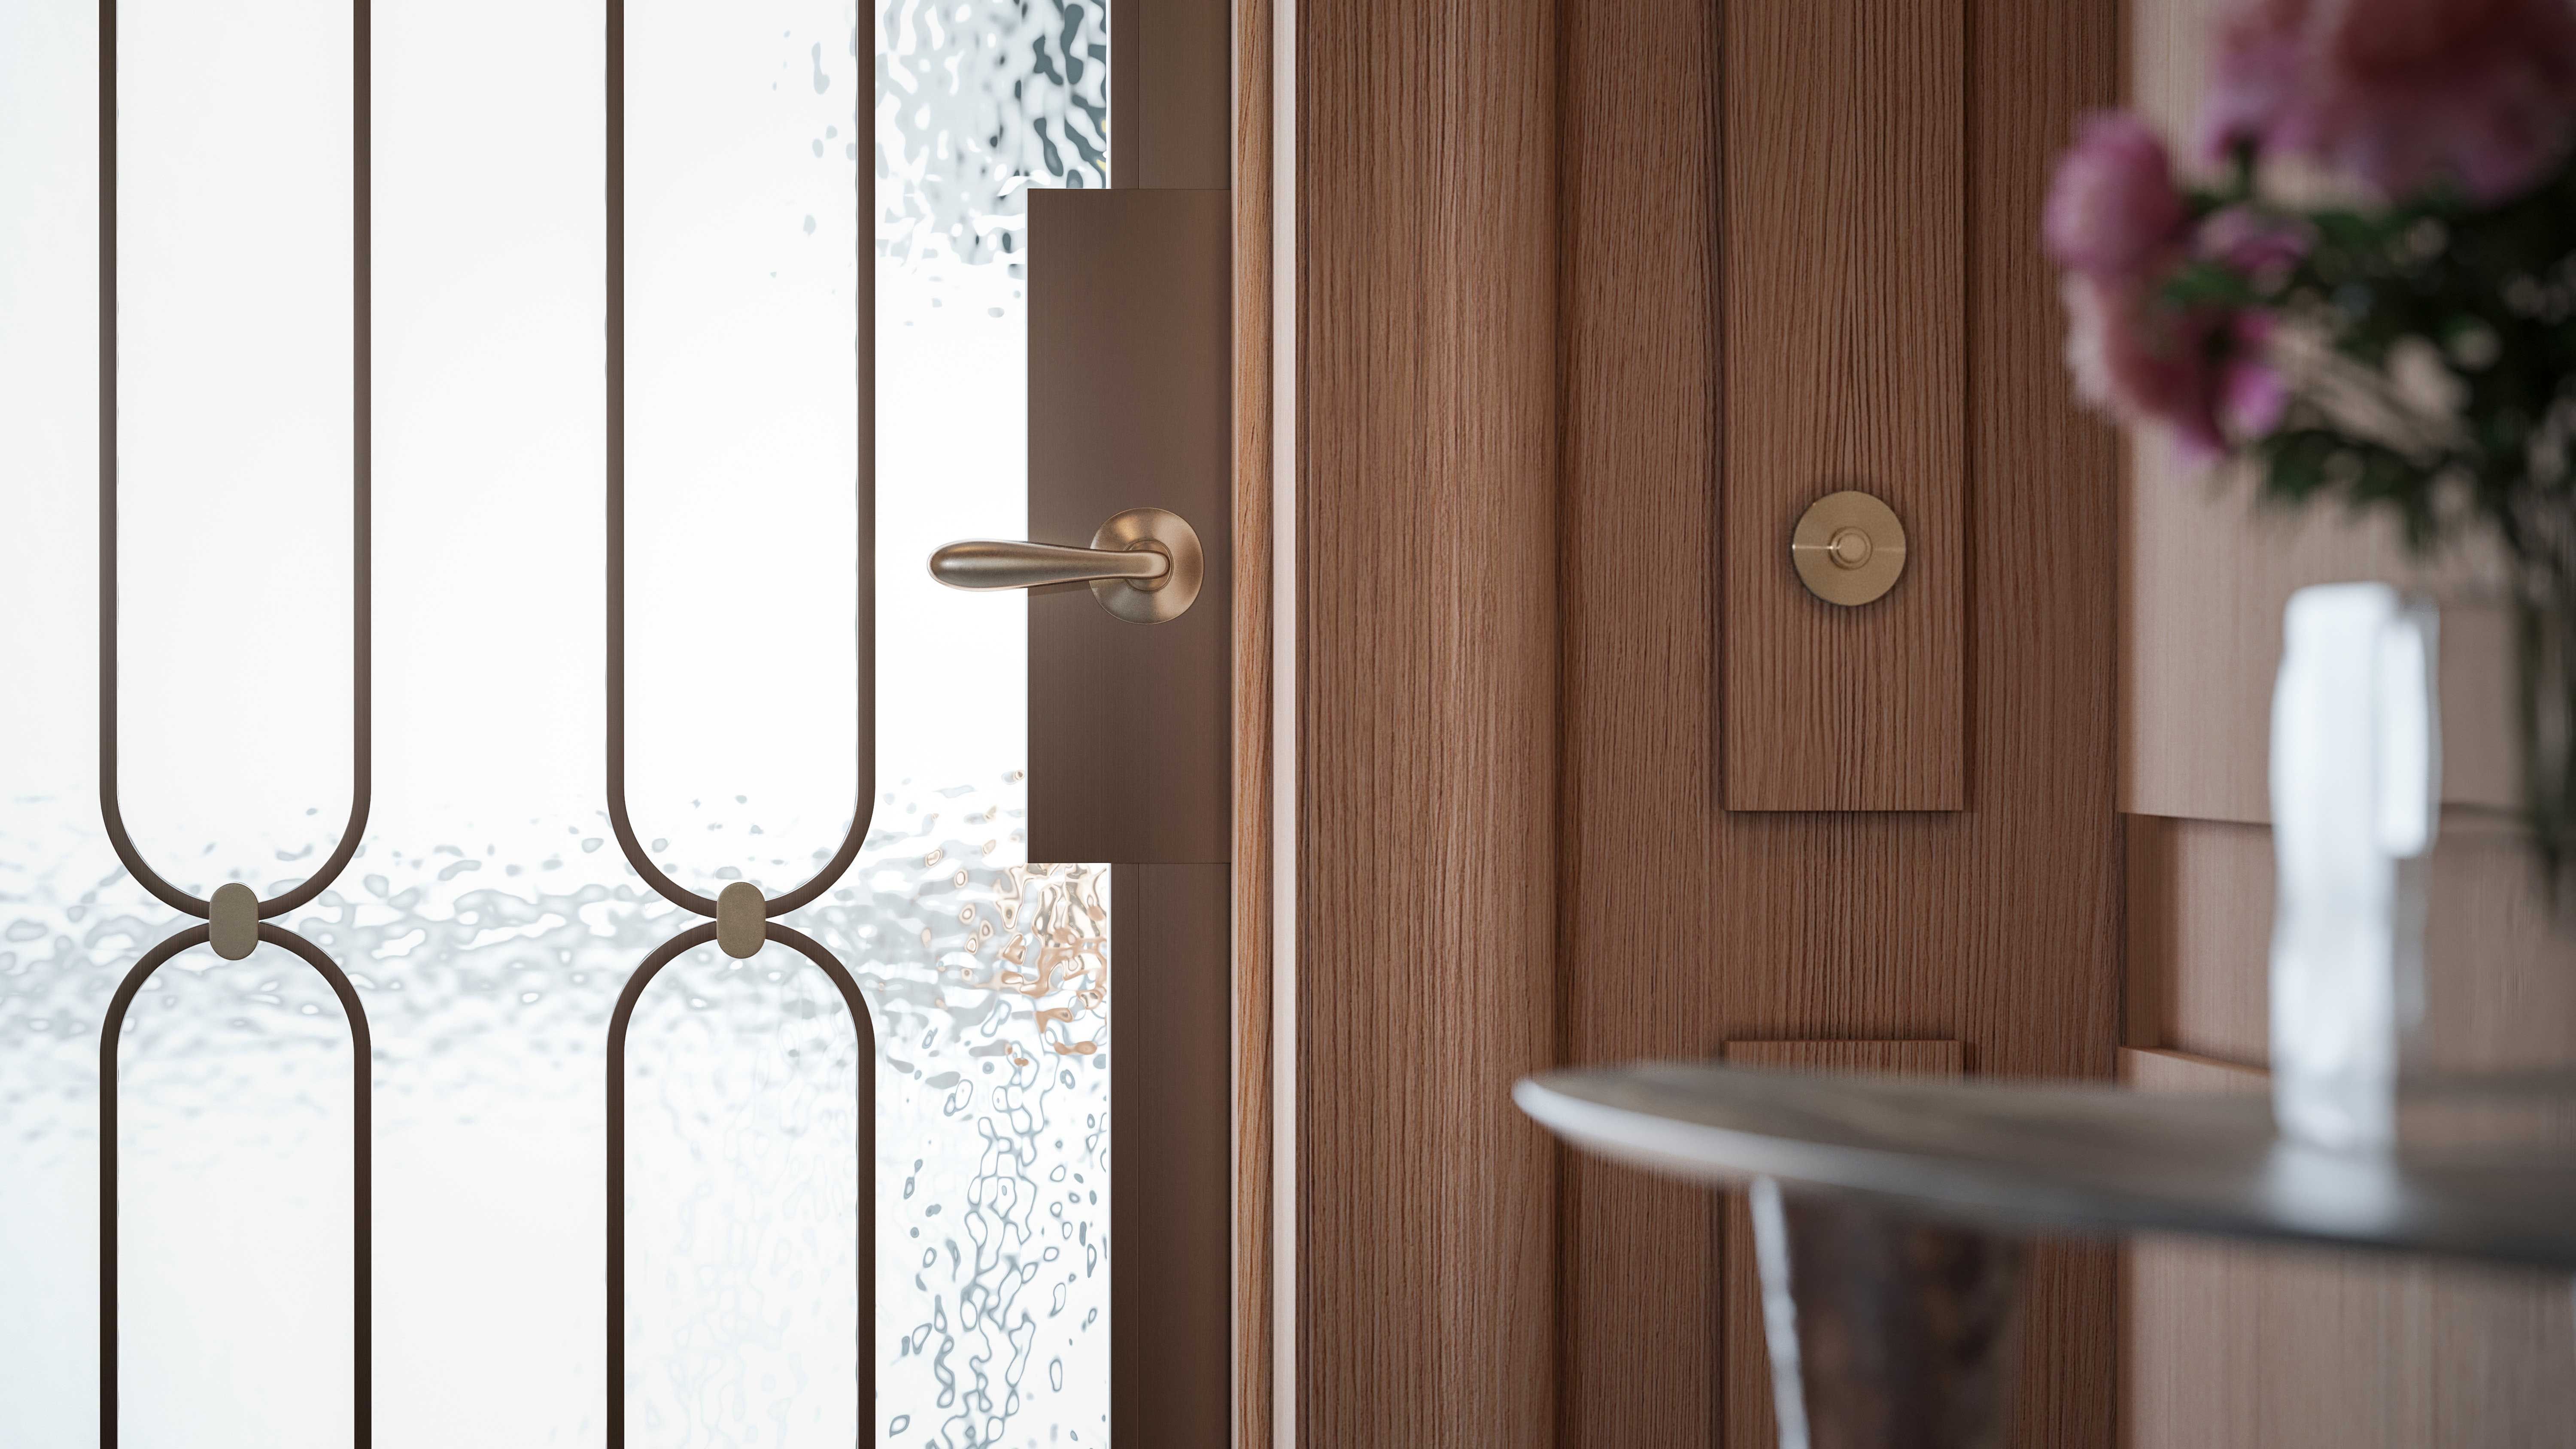 Private residence entry vestibule door with Nanz burnished nickel lever and Vervloet doorbell